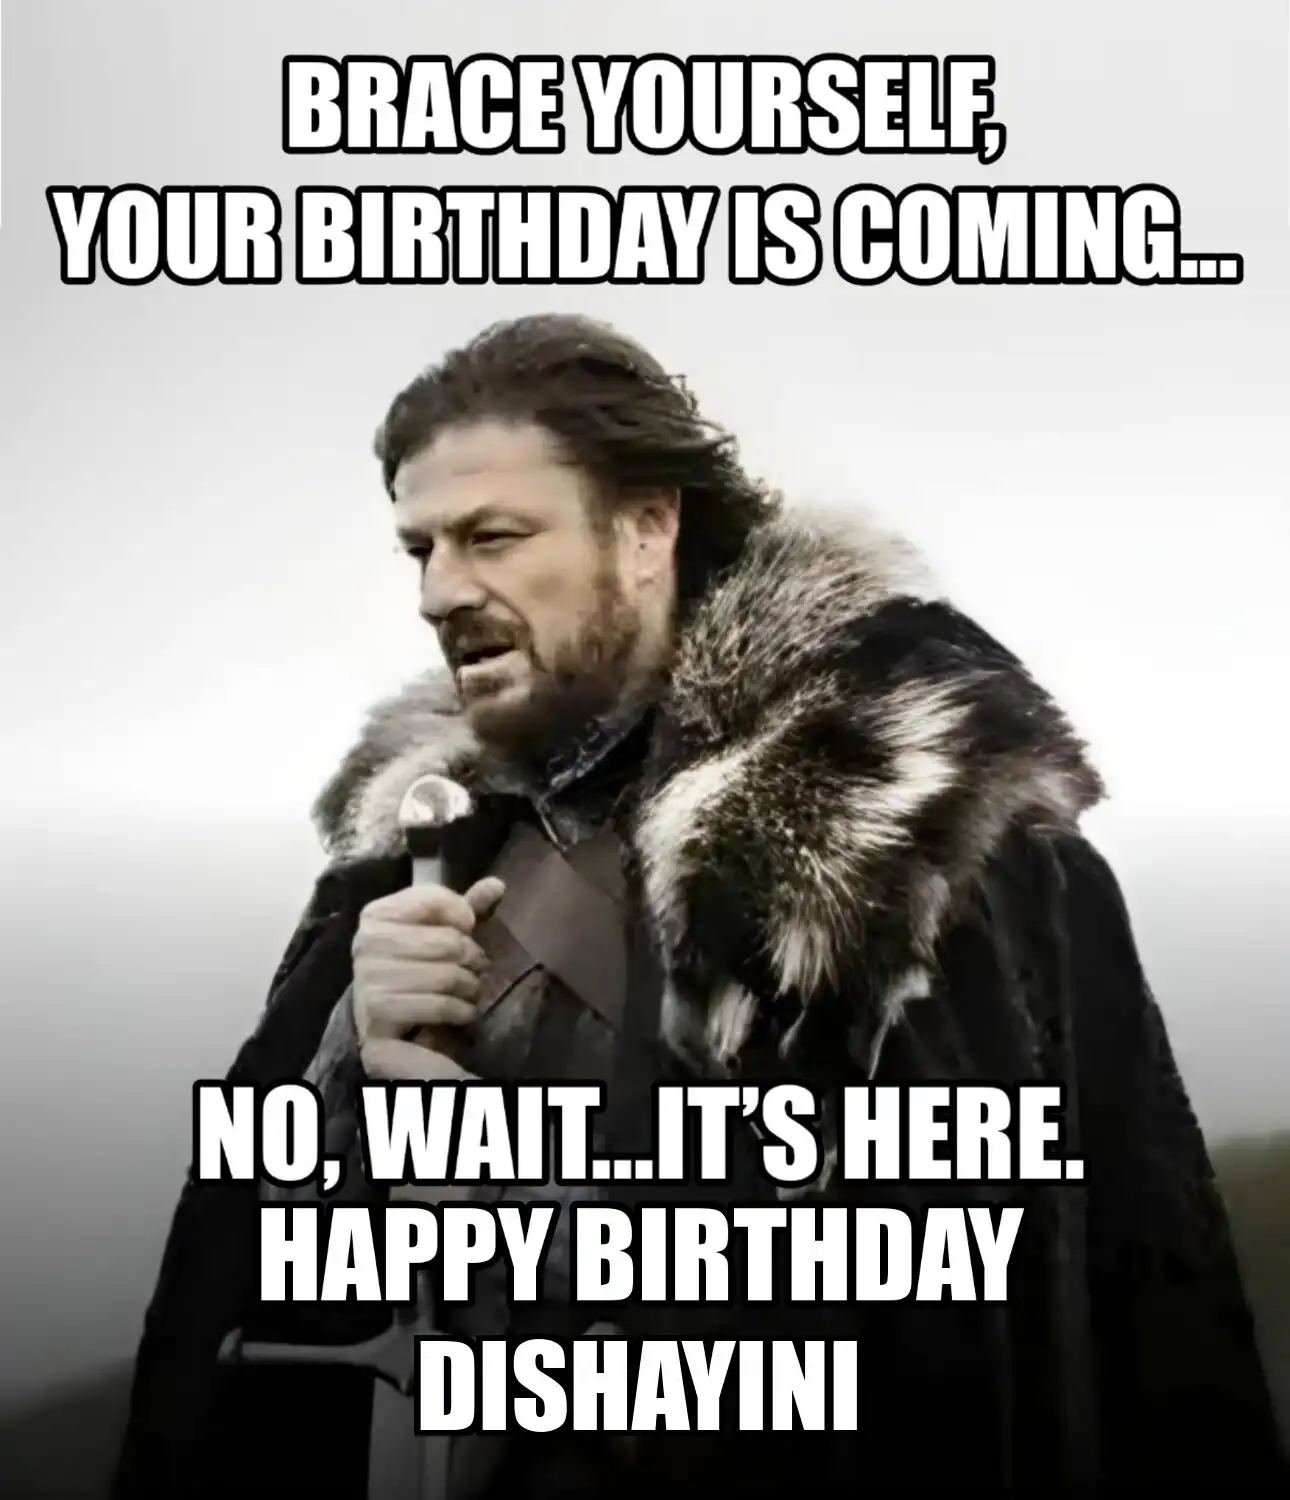 Happy Birthday Dishayini Brace Yourself Your Birthday Is Coming Meme